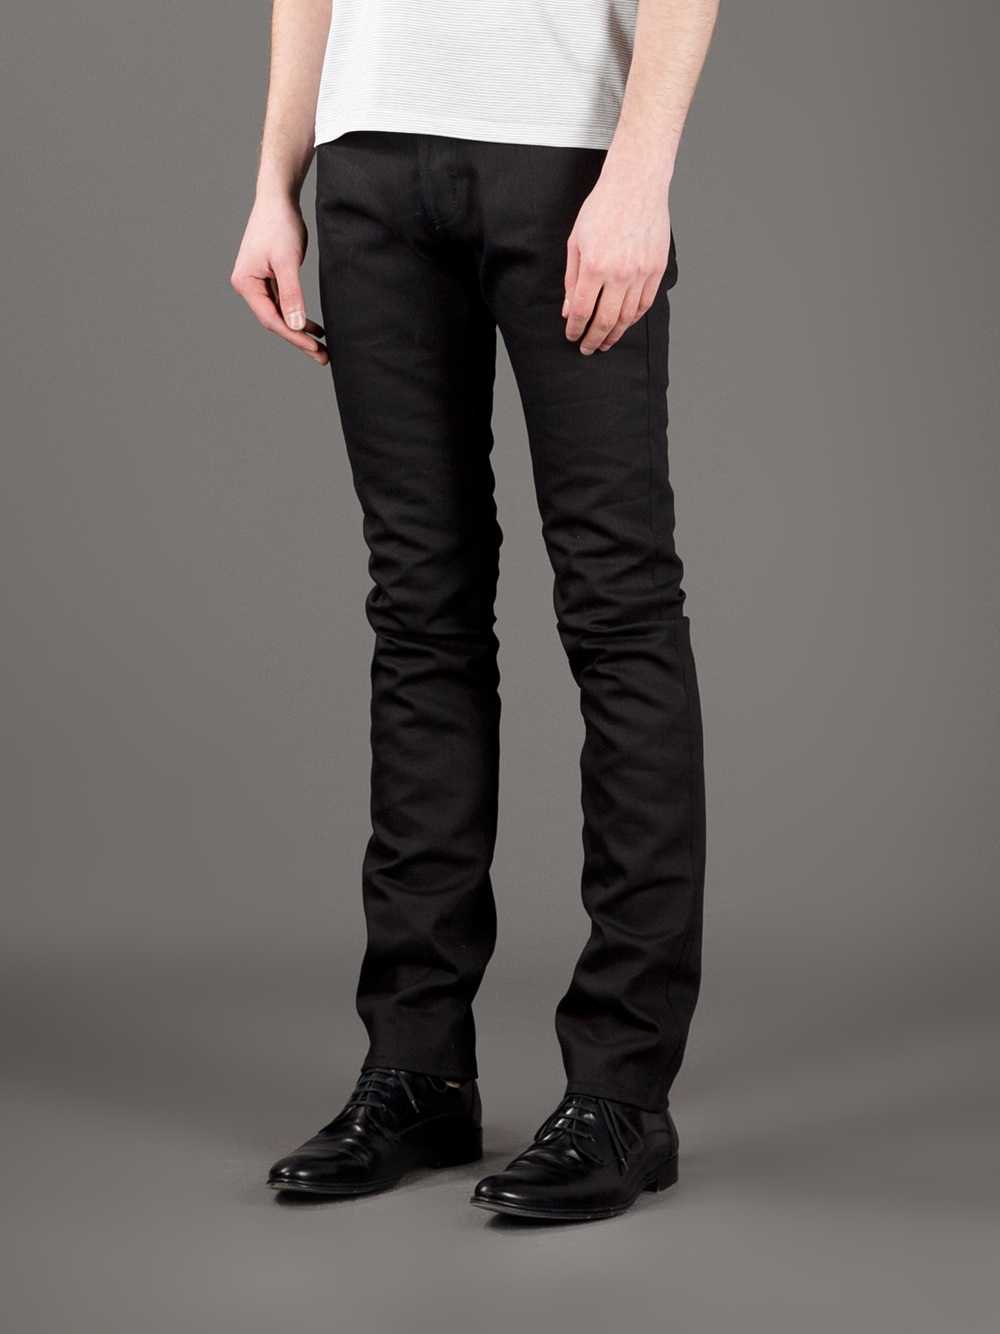 Saint Laurent Coated Slim Fit Jeans in Black for Men - Lyst